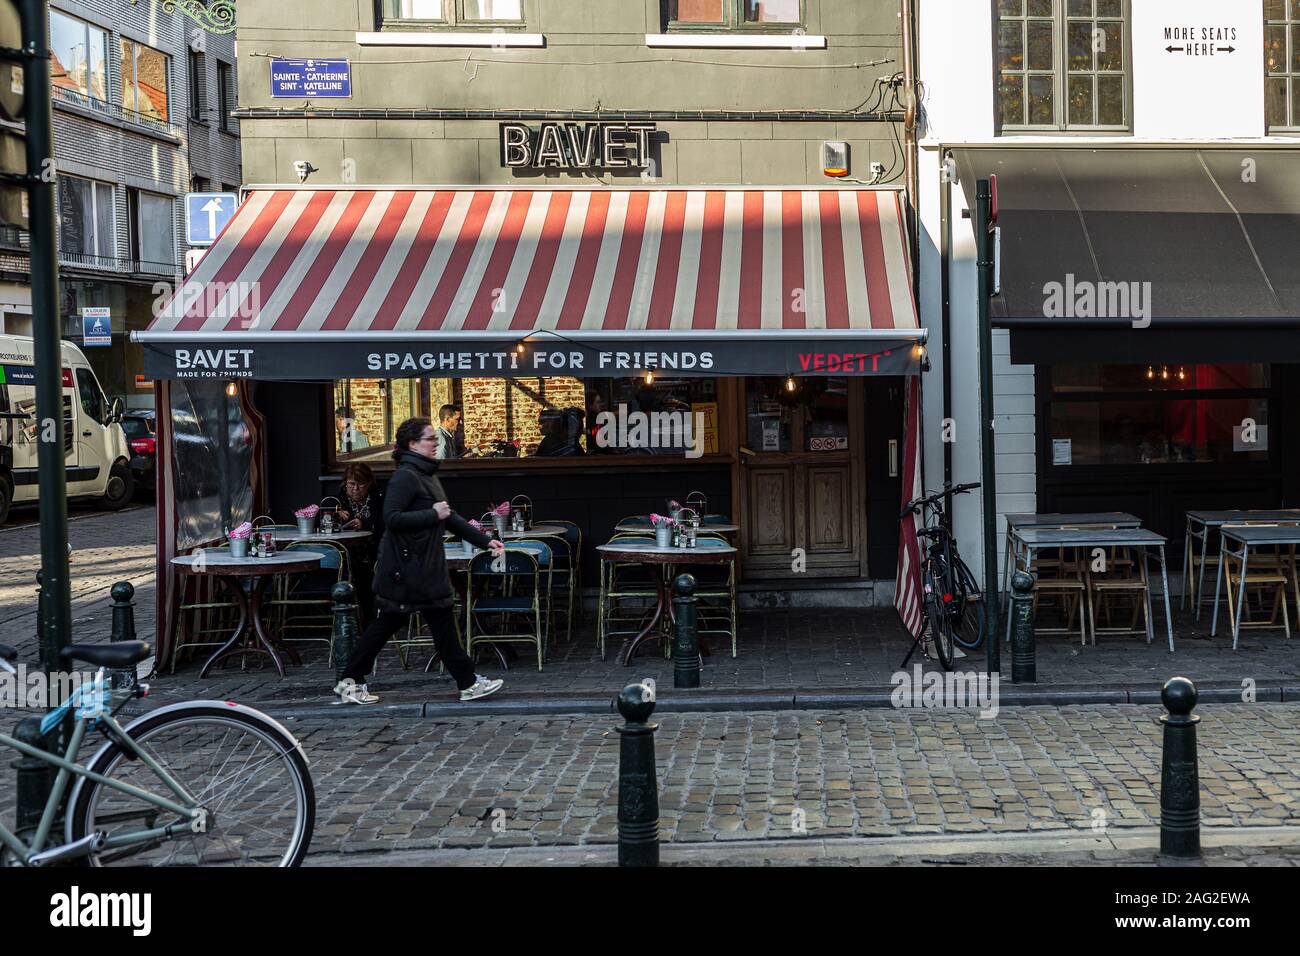 Bavet restaurant, Brussels, Belgium Stock Photo